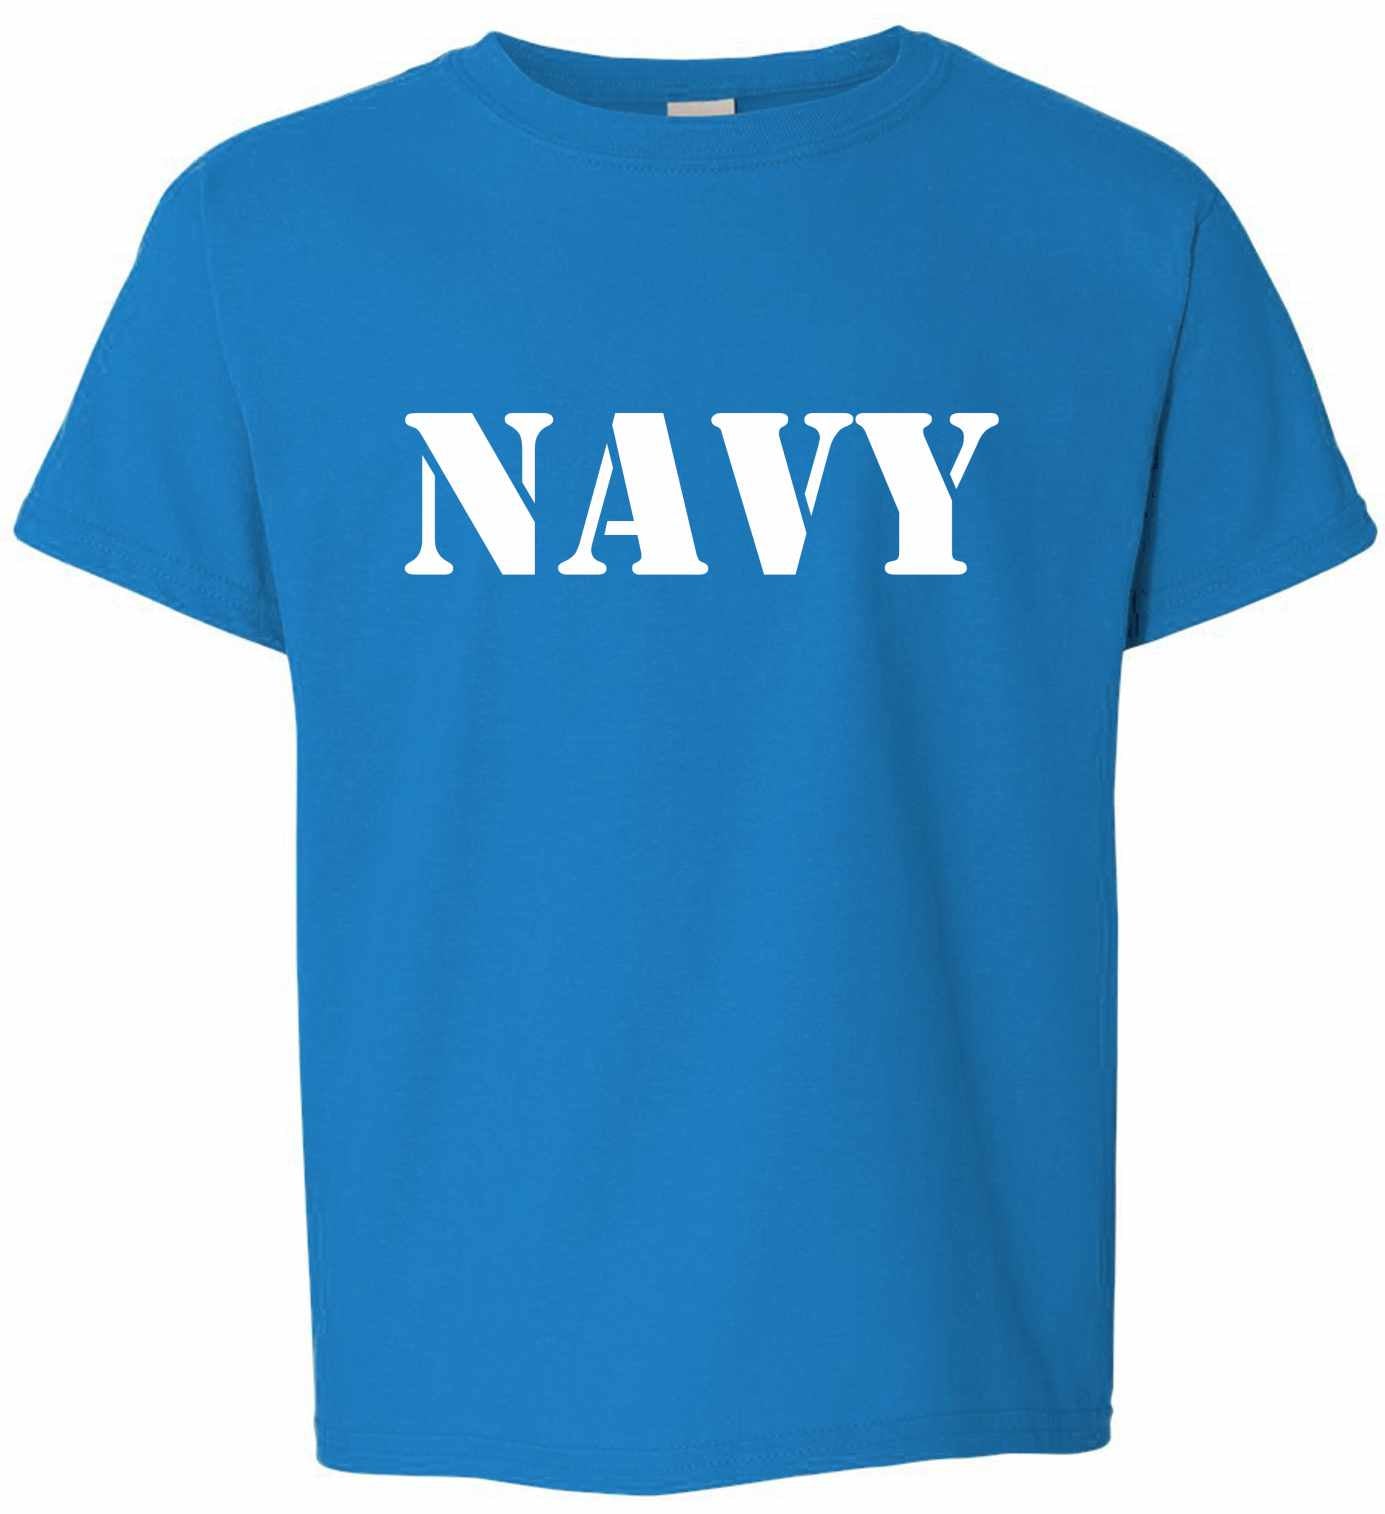 NAVY on Kids T-Shirt